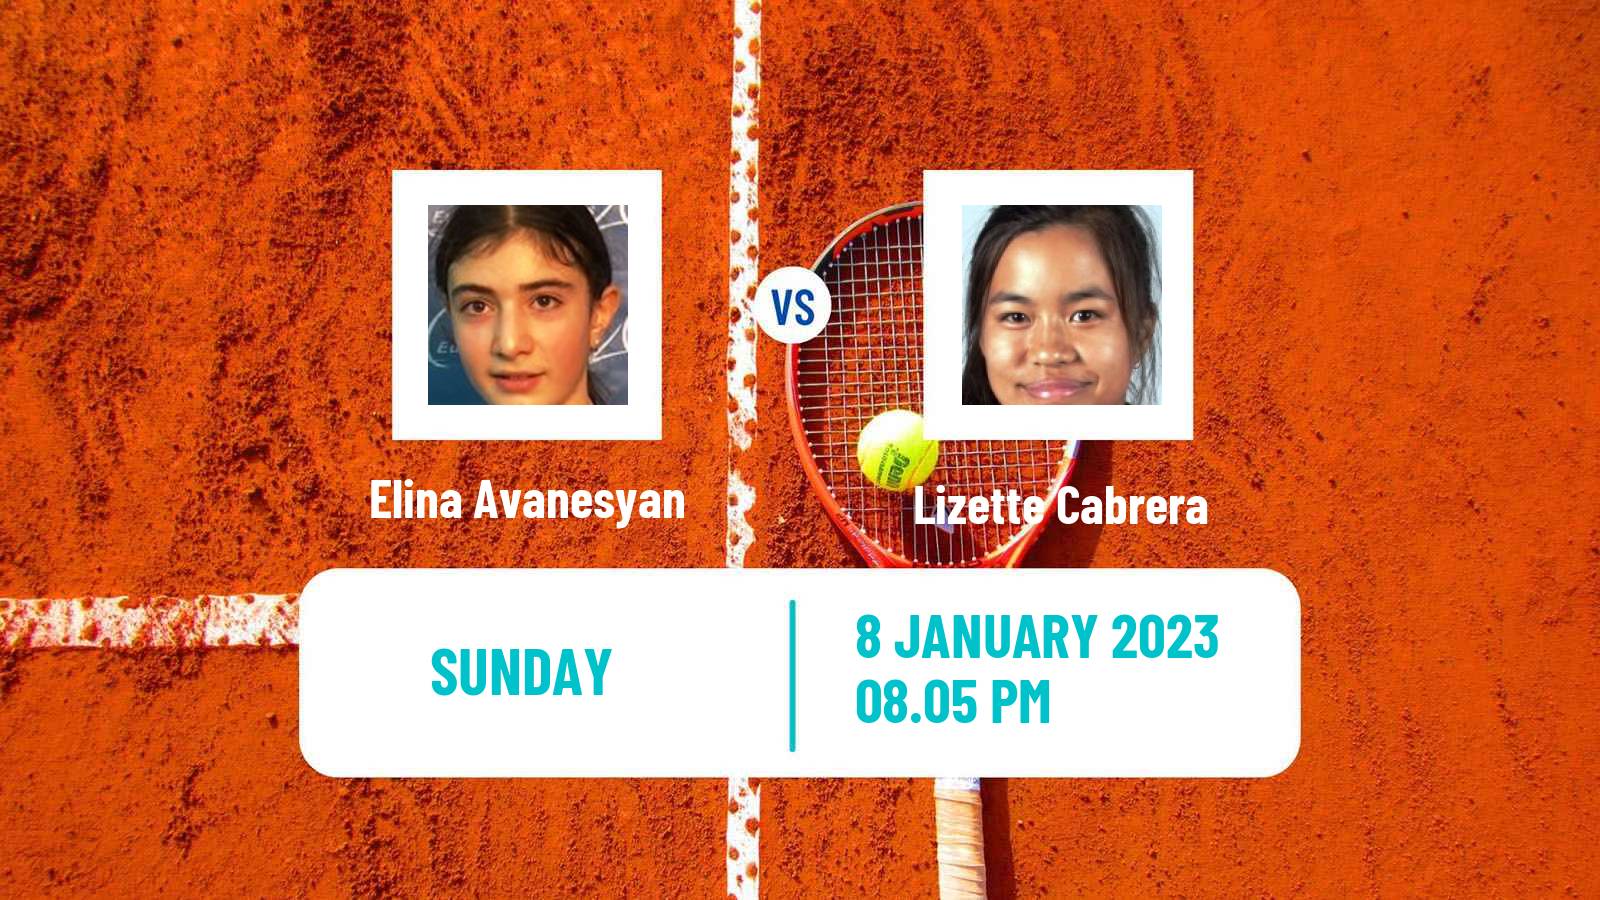 Tennis WTA Australian Open Elina Avanesyan - Lizette Cabrera